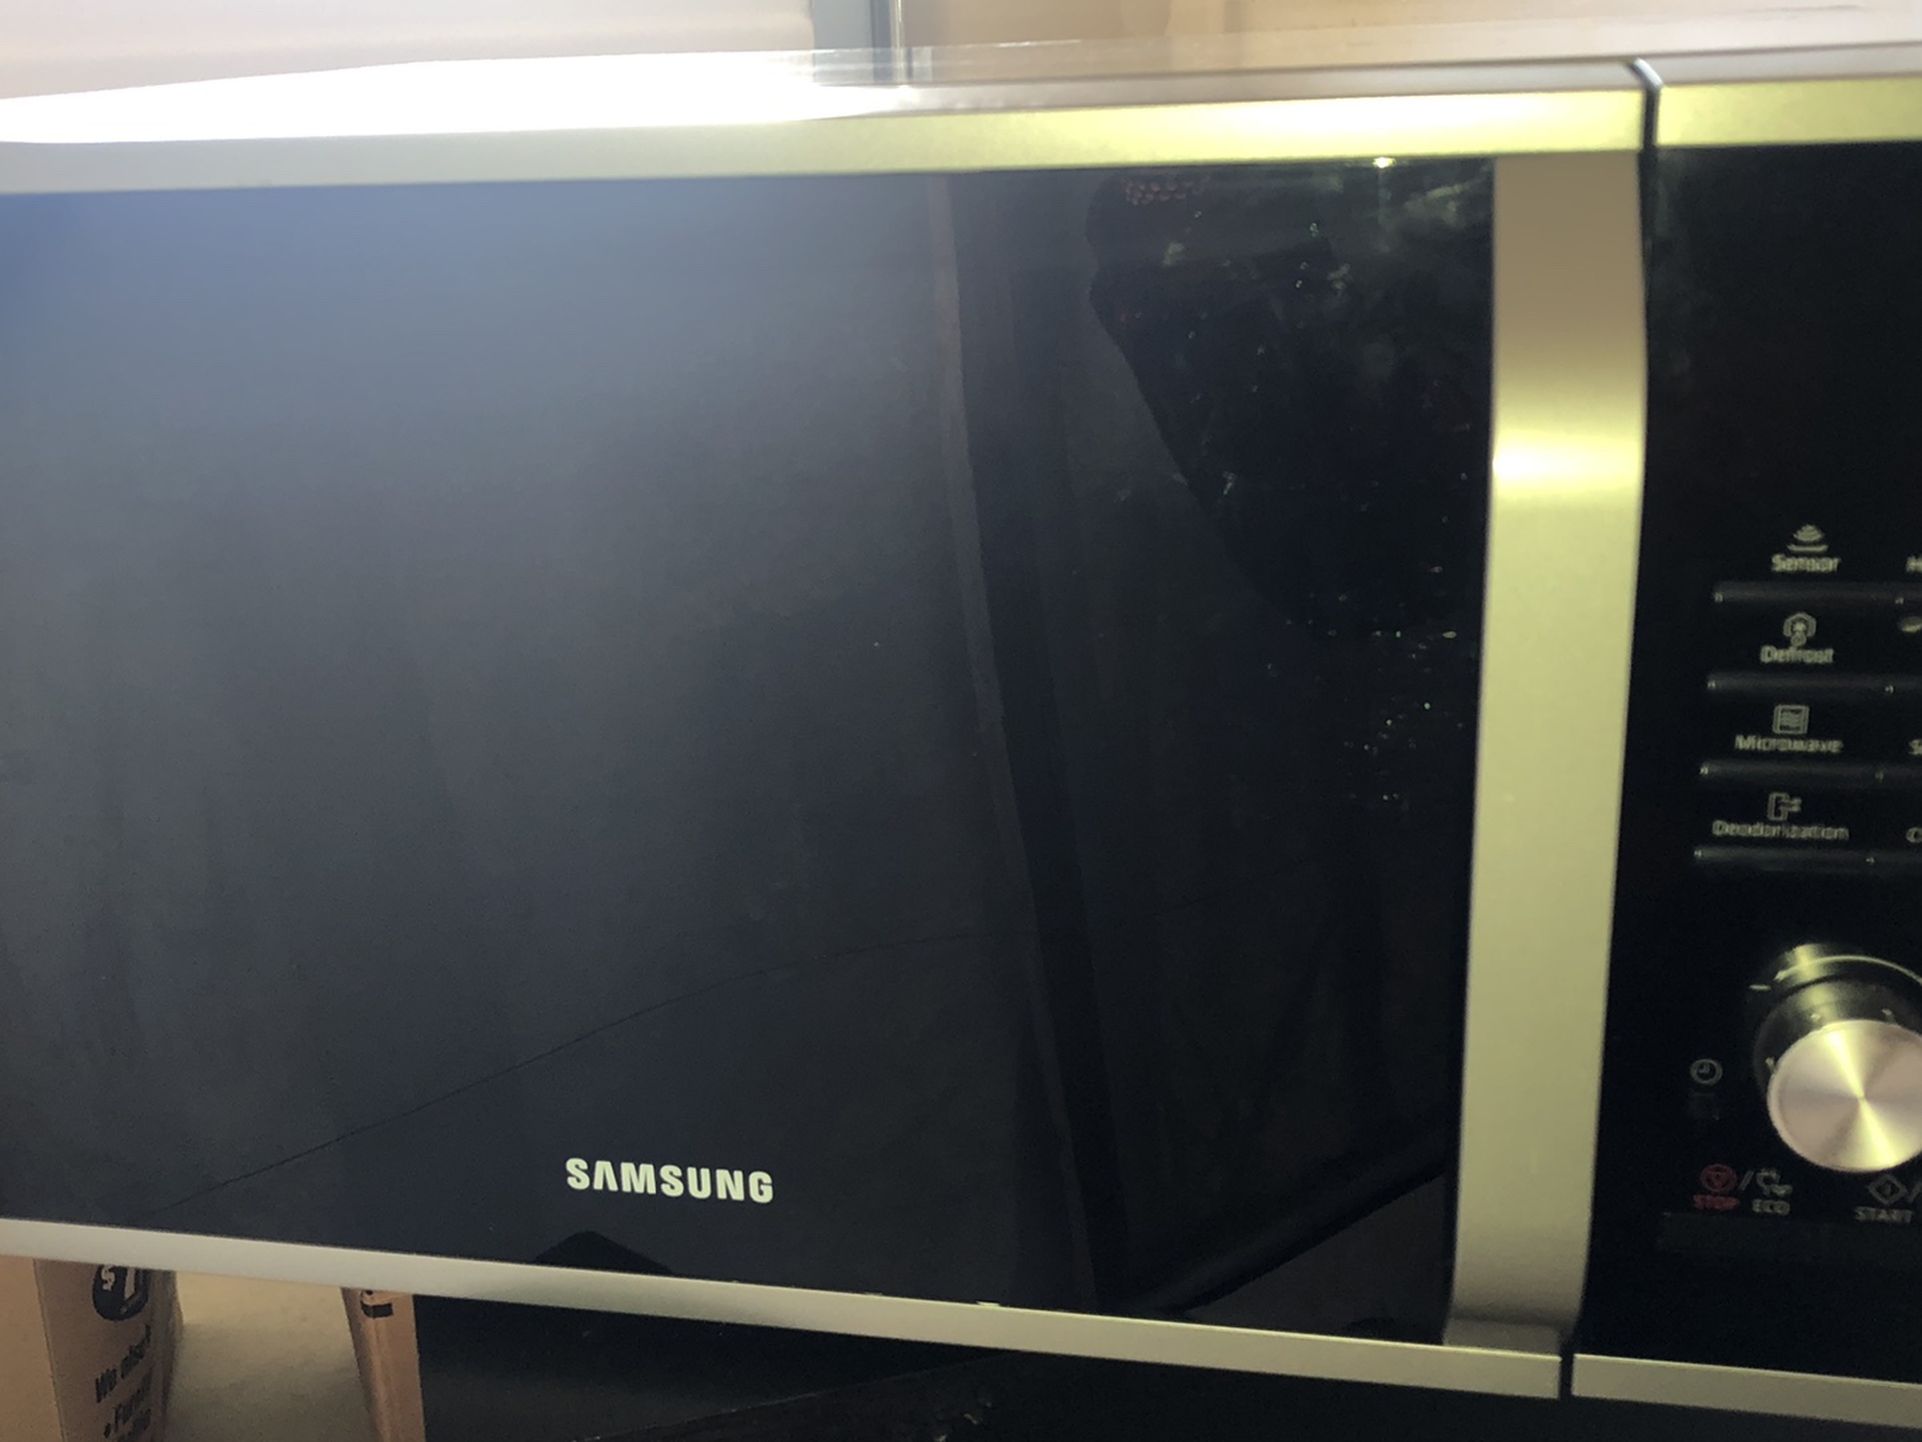 Samsung Countertop Microwave